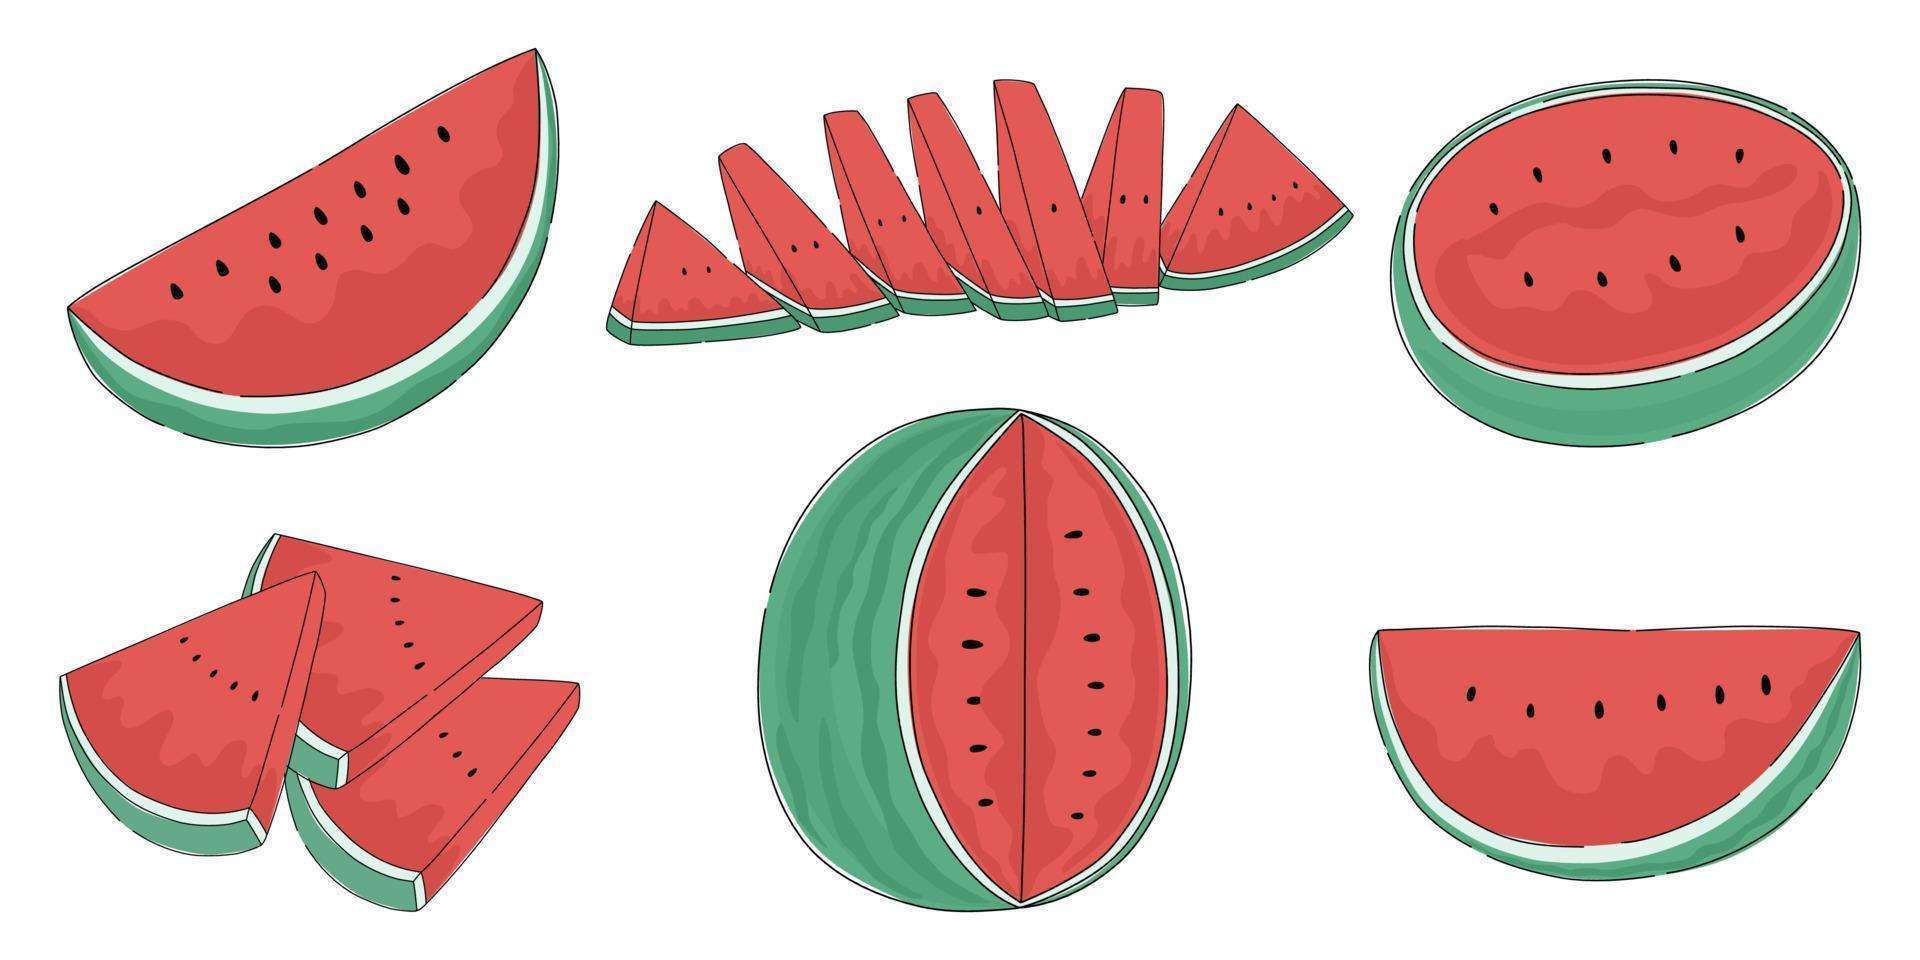 Watermelon vector set designed in doodle style on white background. for decoration, digital print, sticker, fruit illustration, fruit shop, card, art for kids and more